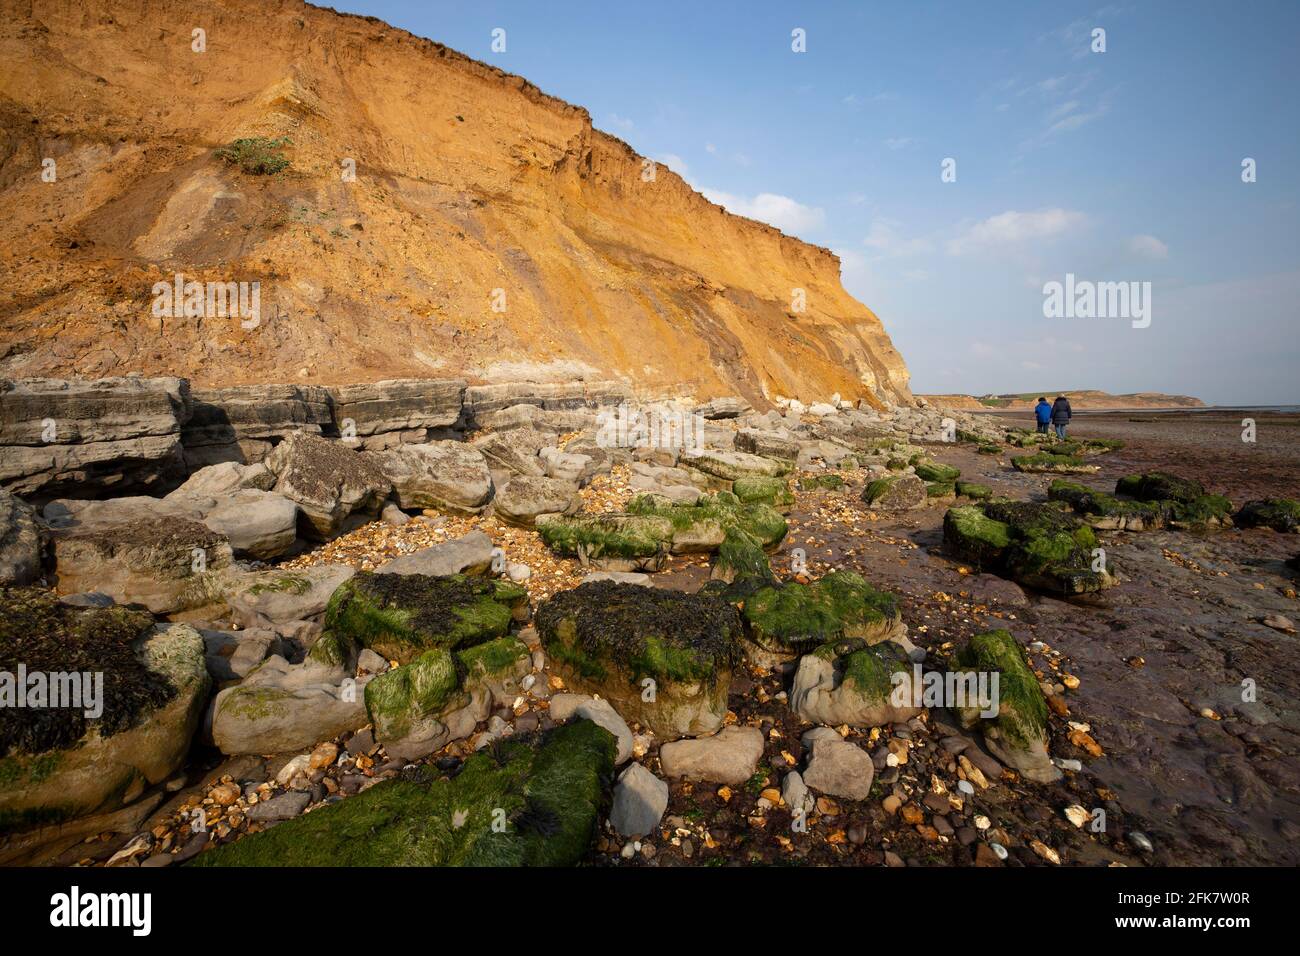 Compton,Bay,Iguanodon,footprint,casts,Wealden Beds,Geology,paleontology,sedimentary,erosion,Isle of Wight,England,UK, Stock Photo